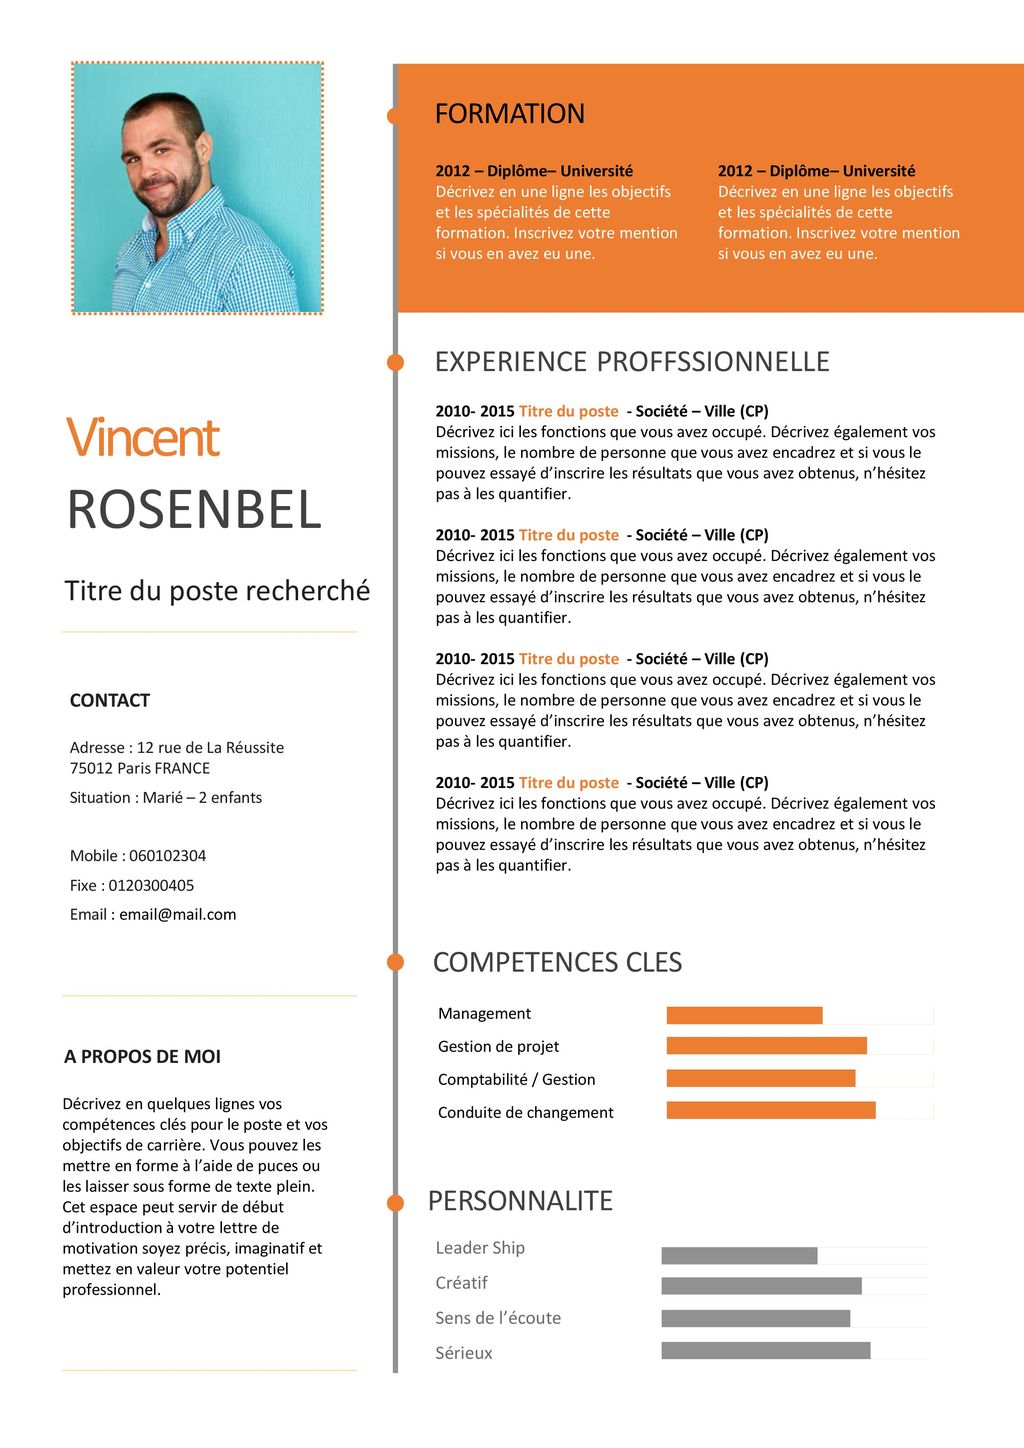 Vincent ROSENBEL FORMATION EXPERIENCE PROFFSSIONNELLE